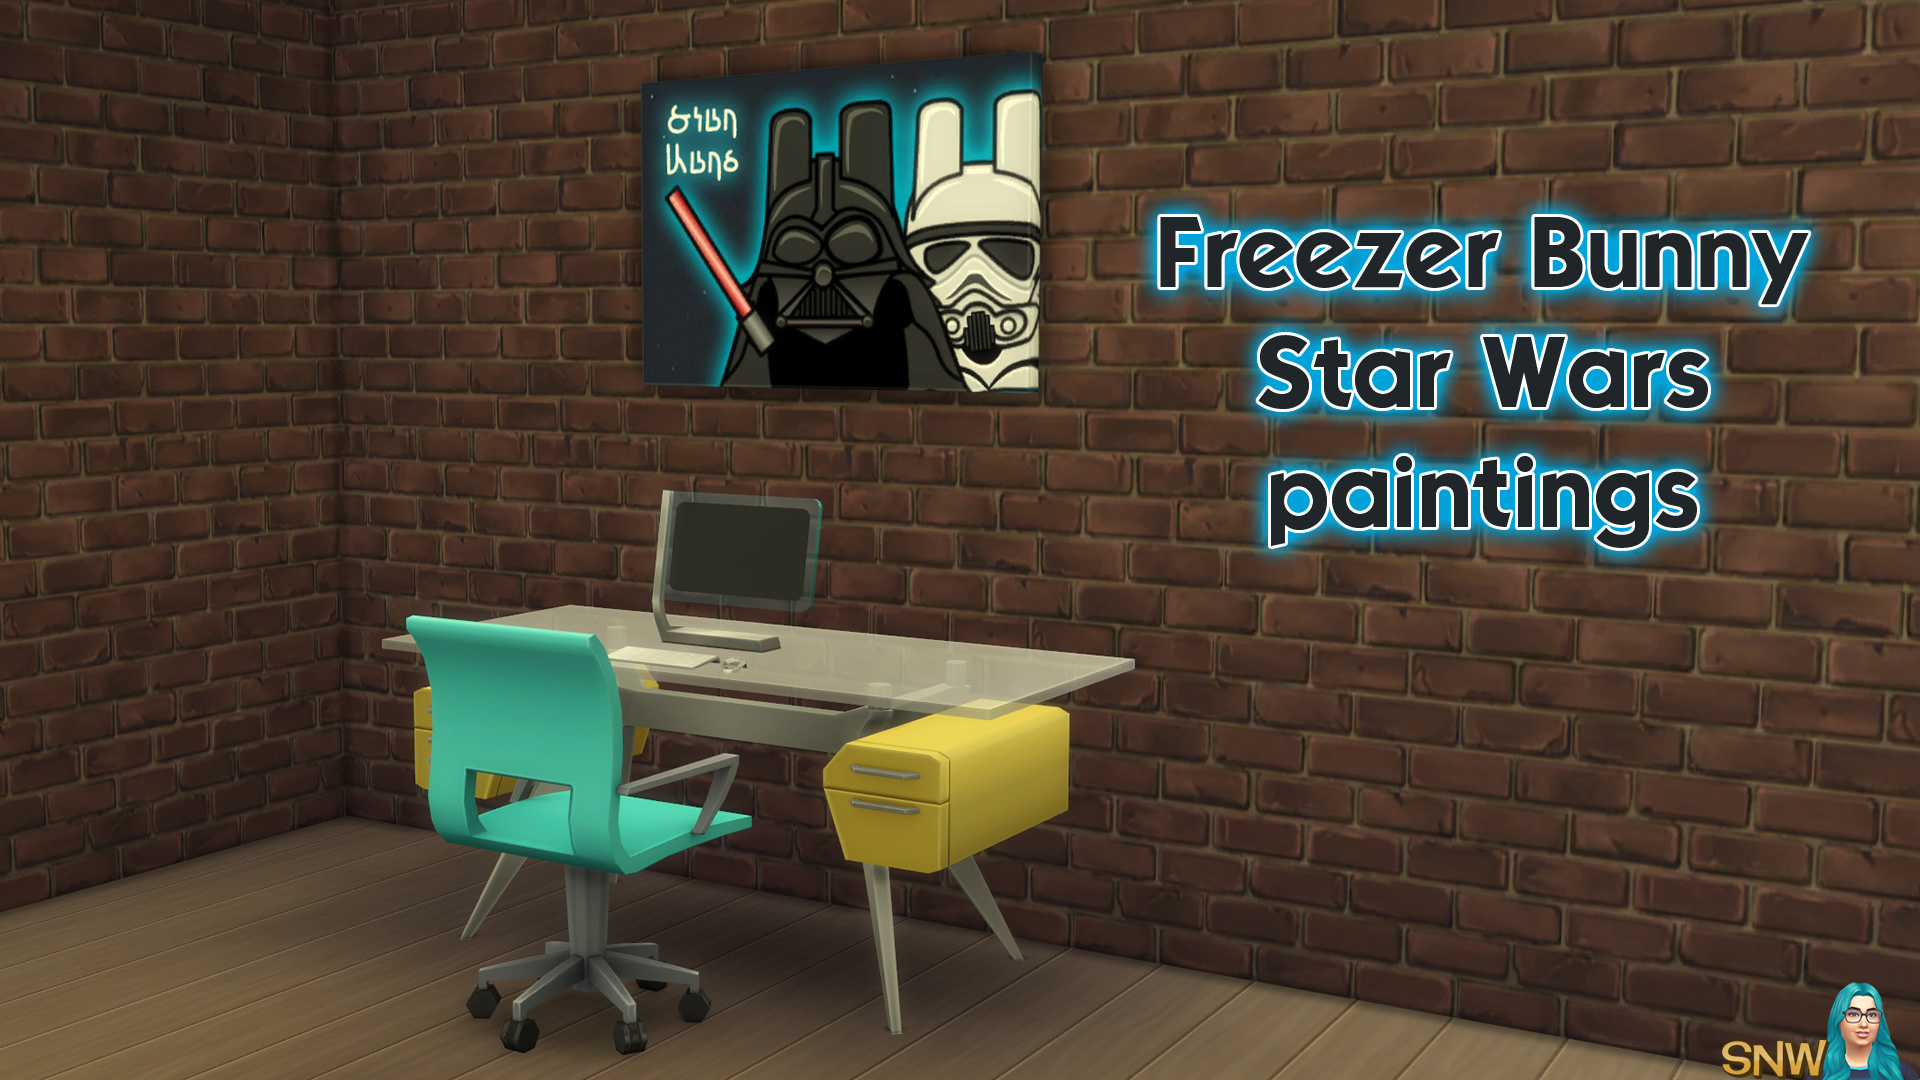 Freezer Bunny Star Wars paintings